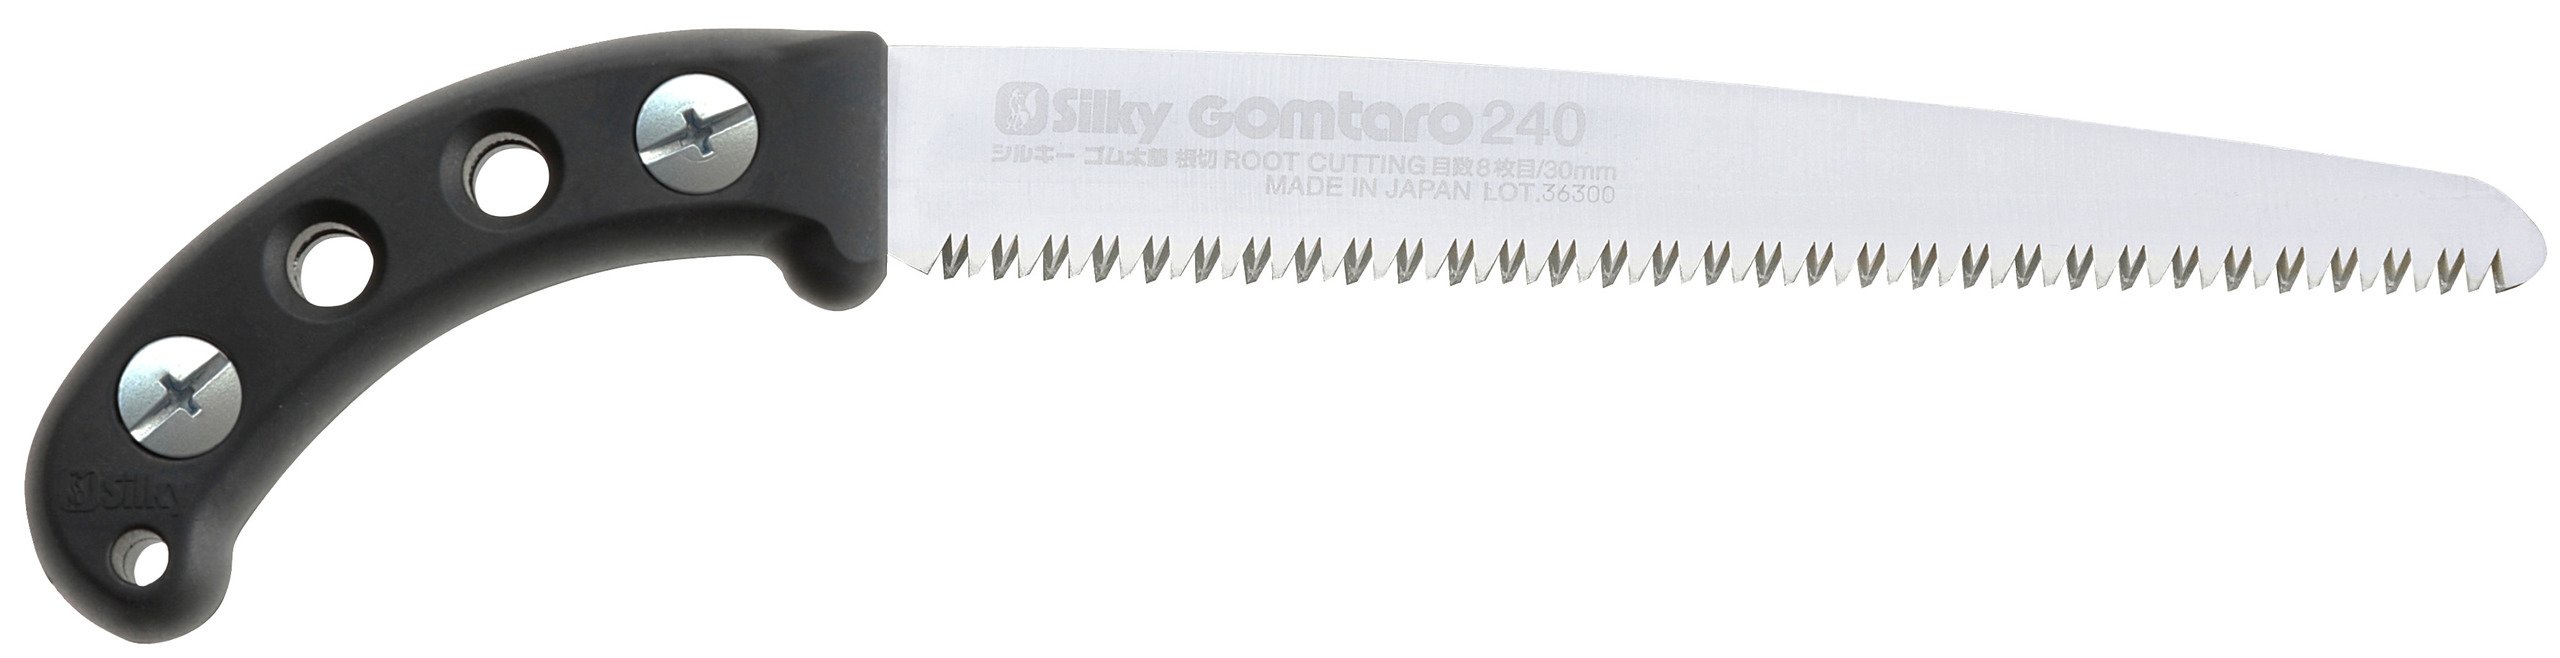 Silky Handsäge Gomtaro 240-8